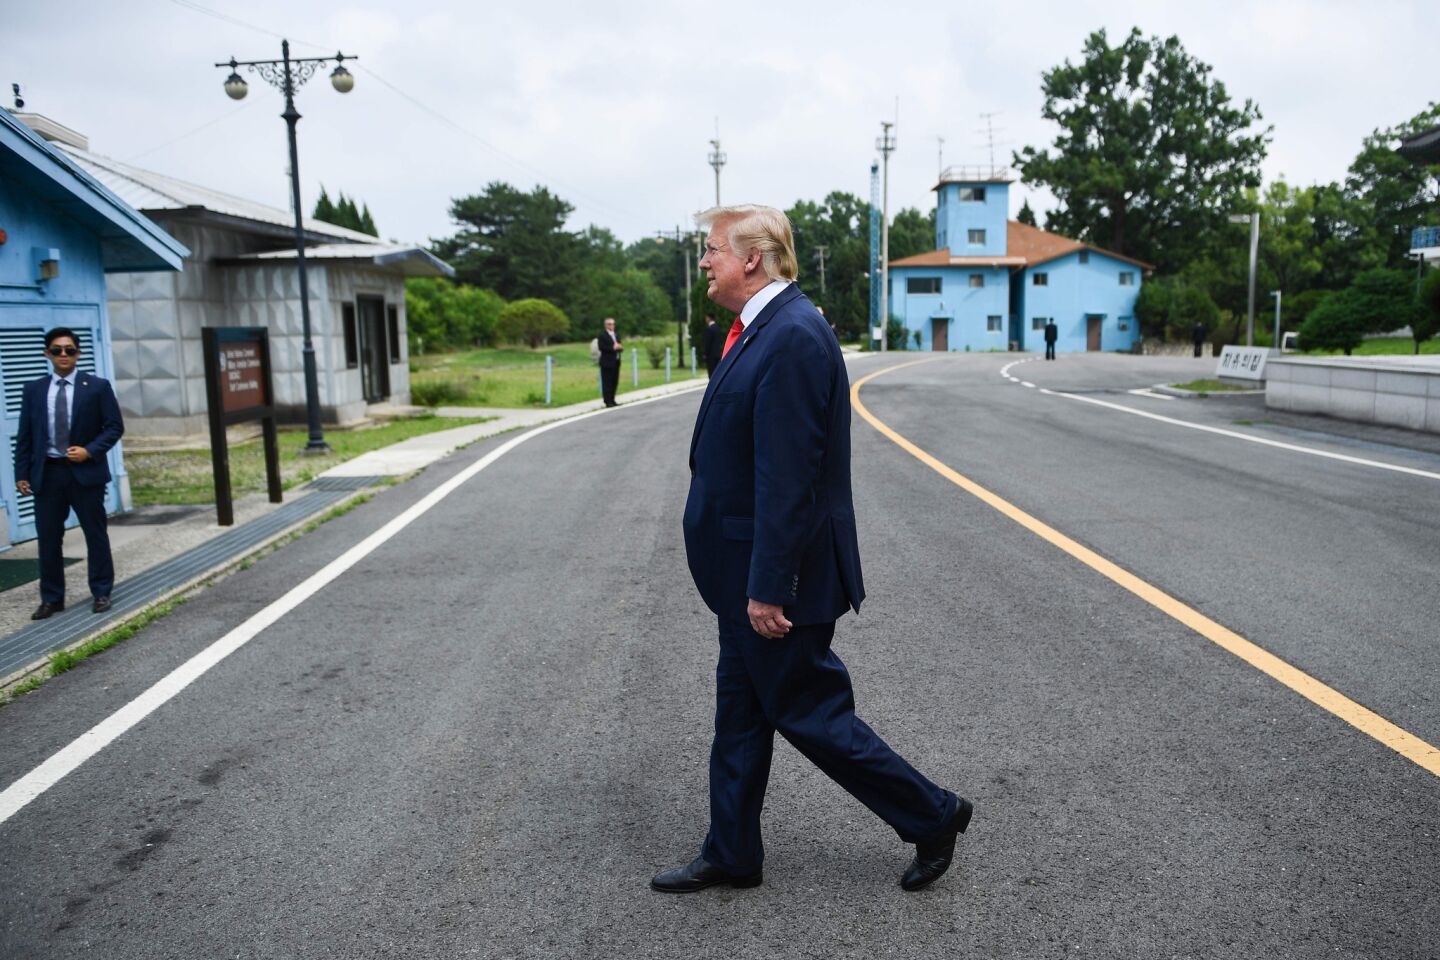 Trump crosses into North Korea